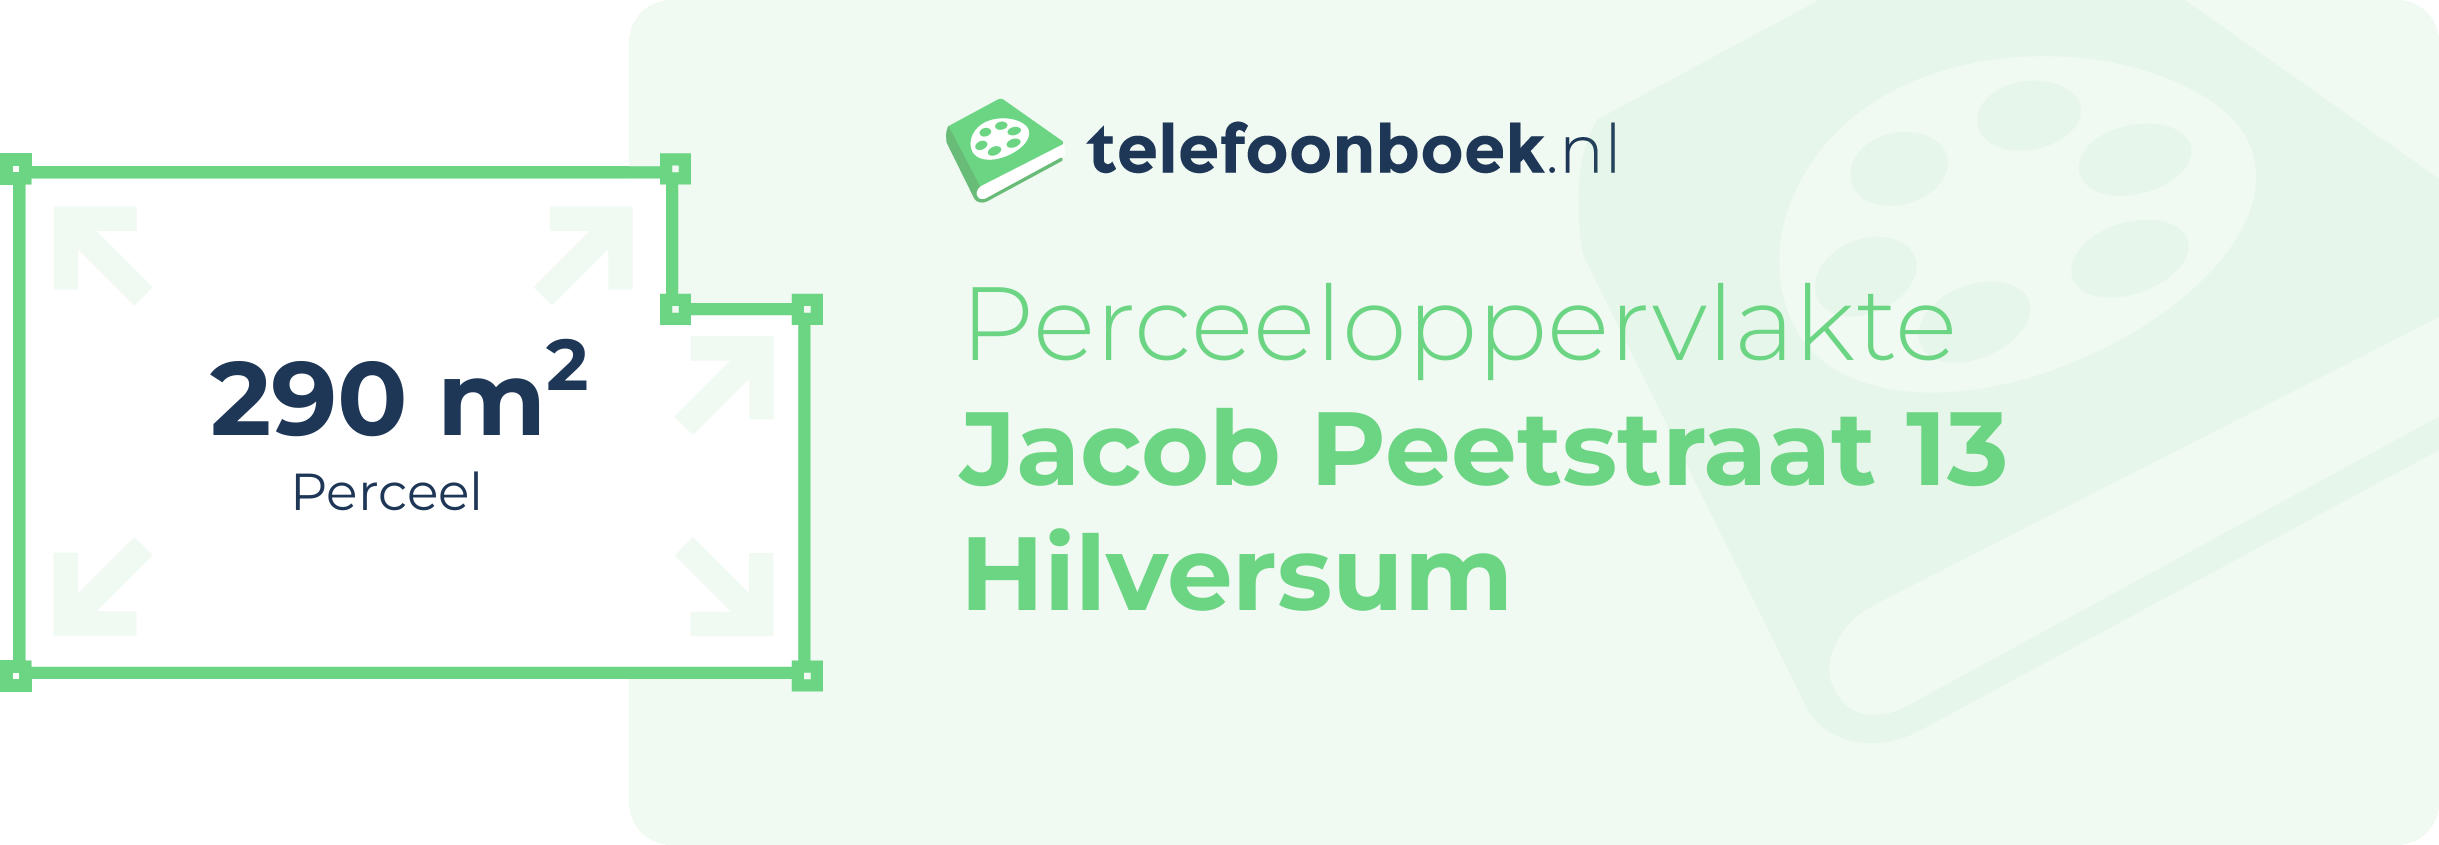 Perceeloppervlakte Jacob Peetstraat 13 Hilversum